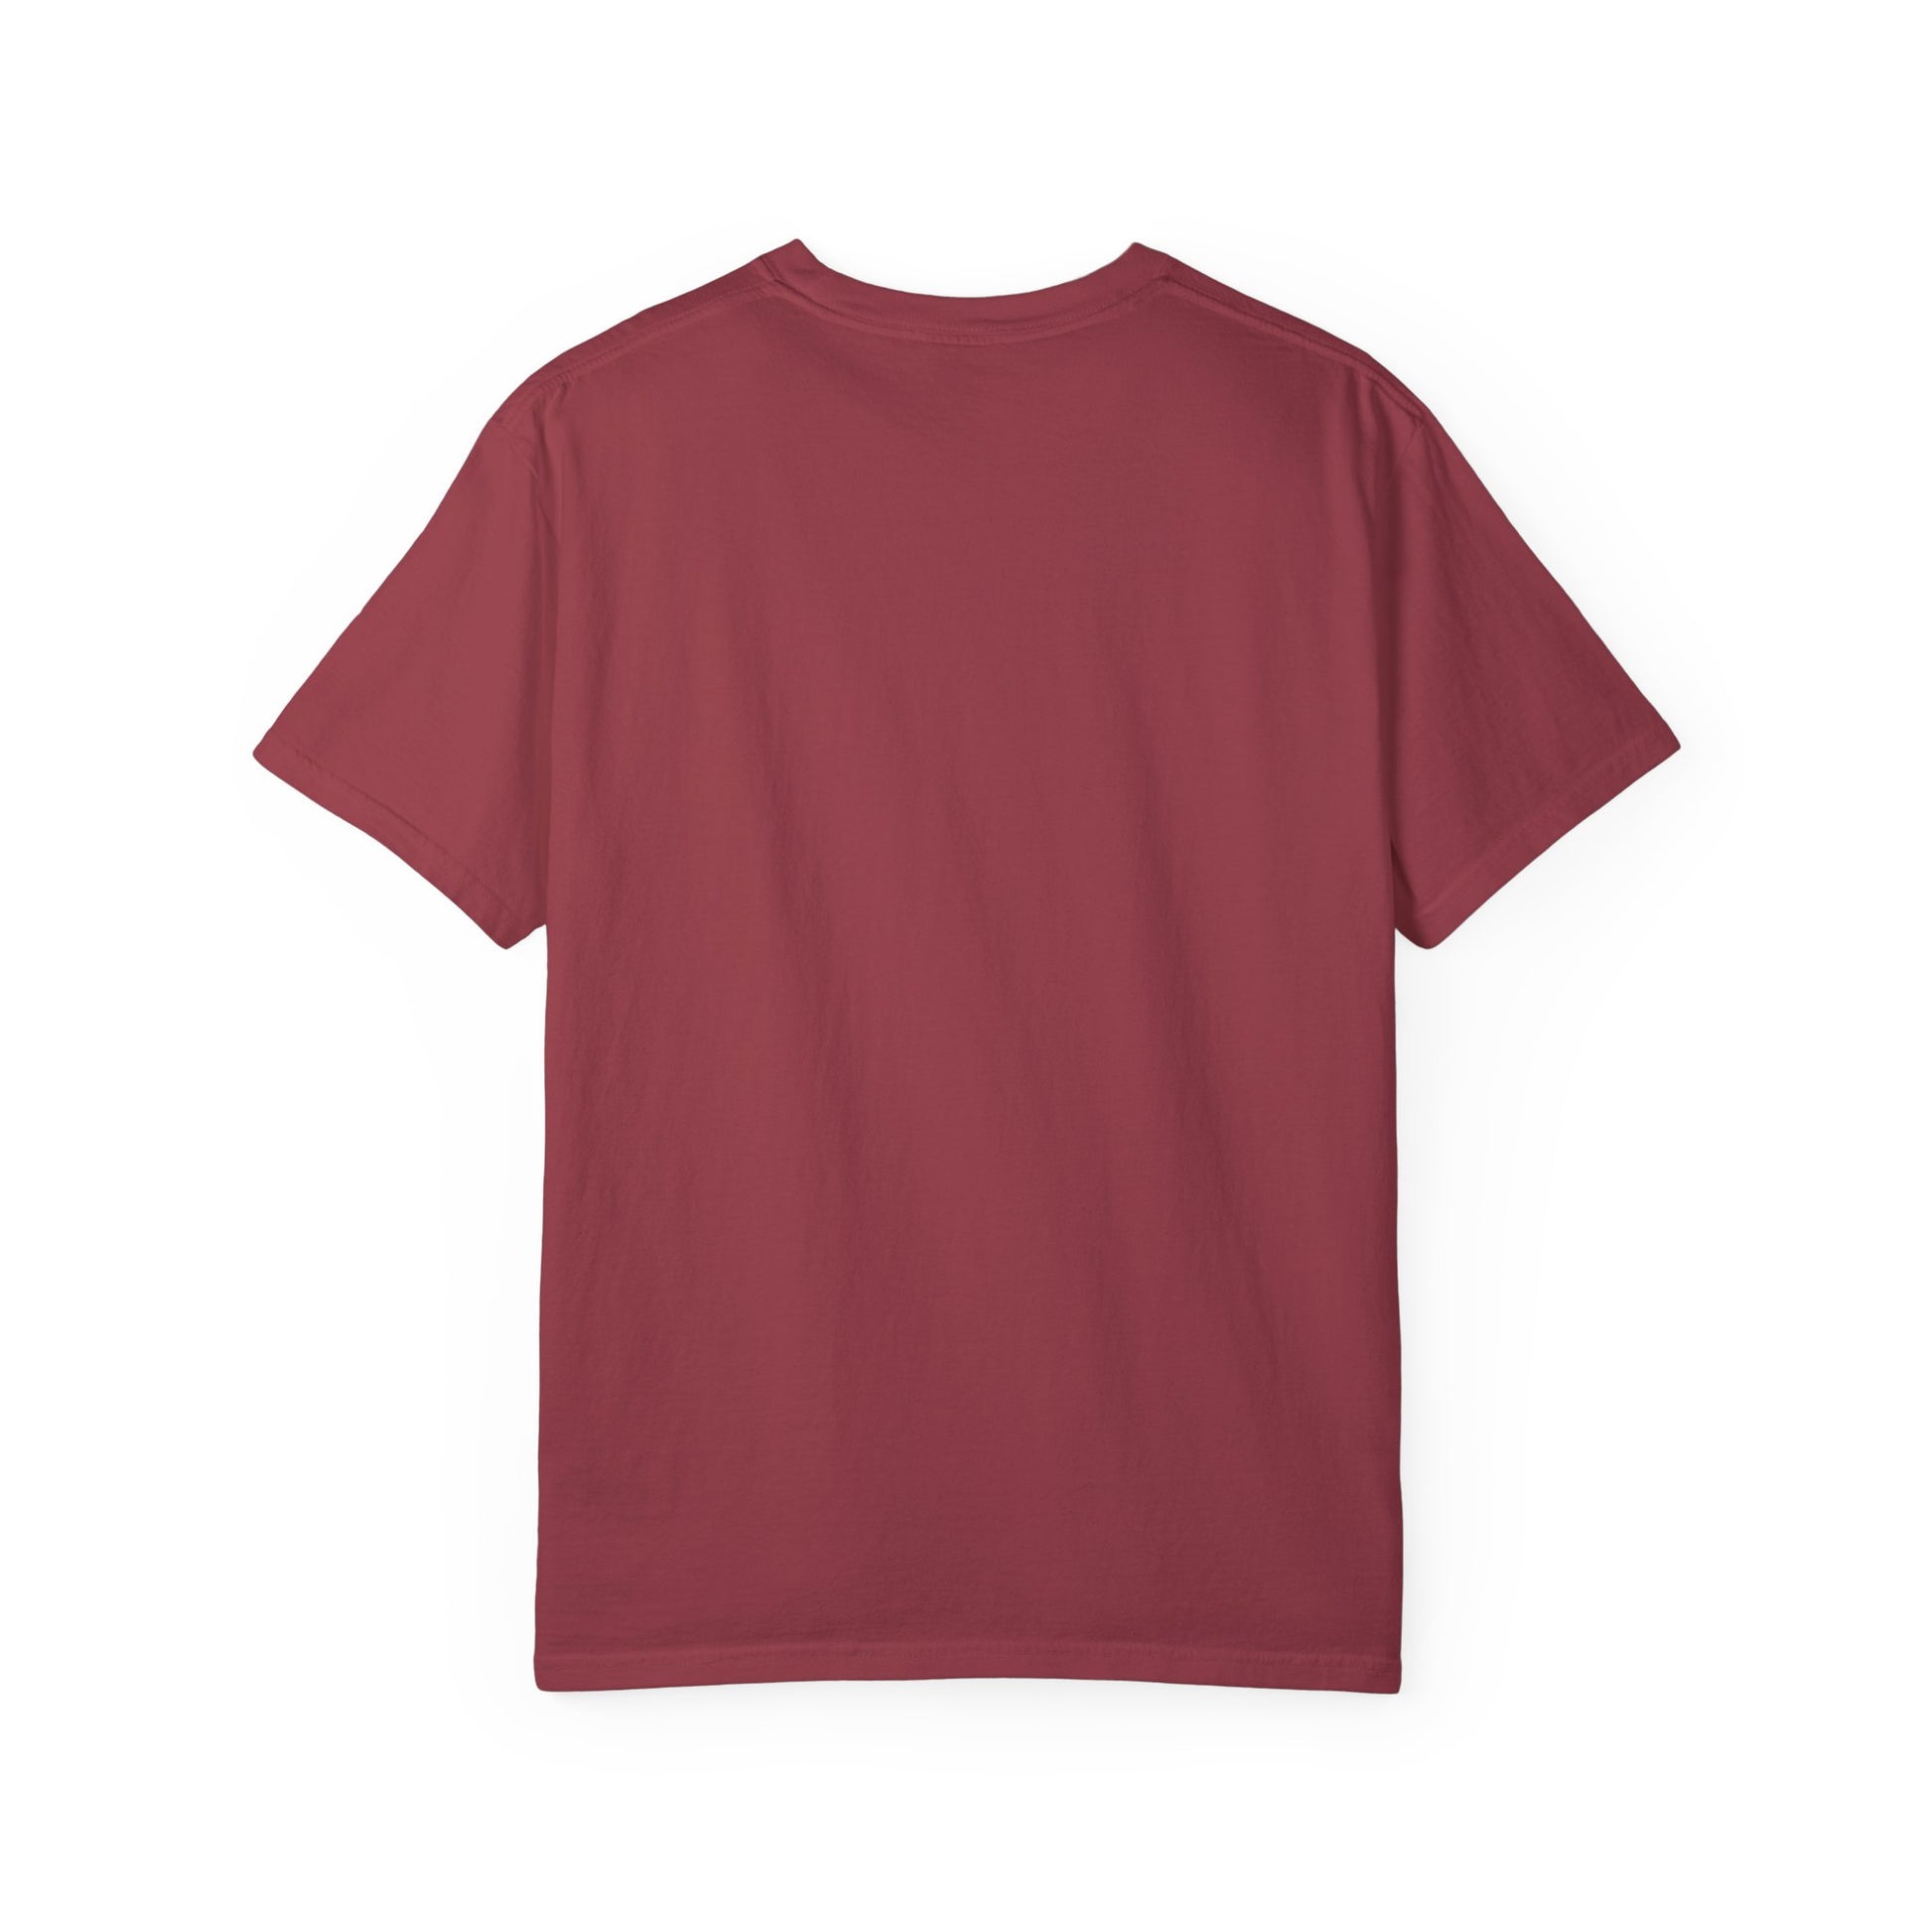 Lion Head Cool Graphic Design Novelty Unisex Garment-dyed T-shirt Cotton Funny Humorous Graphic Soft Premium Unisex Men Women Chili T-shirt Birthday Gift-34